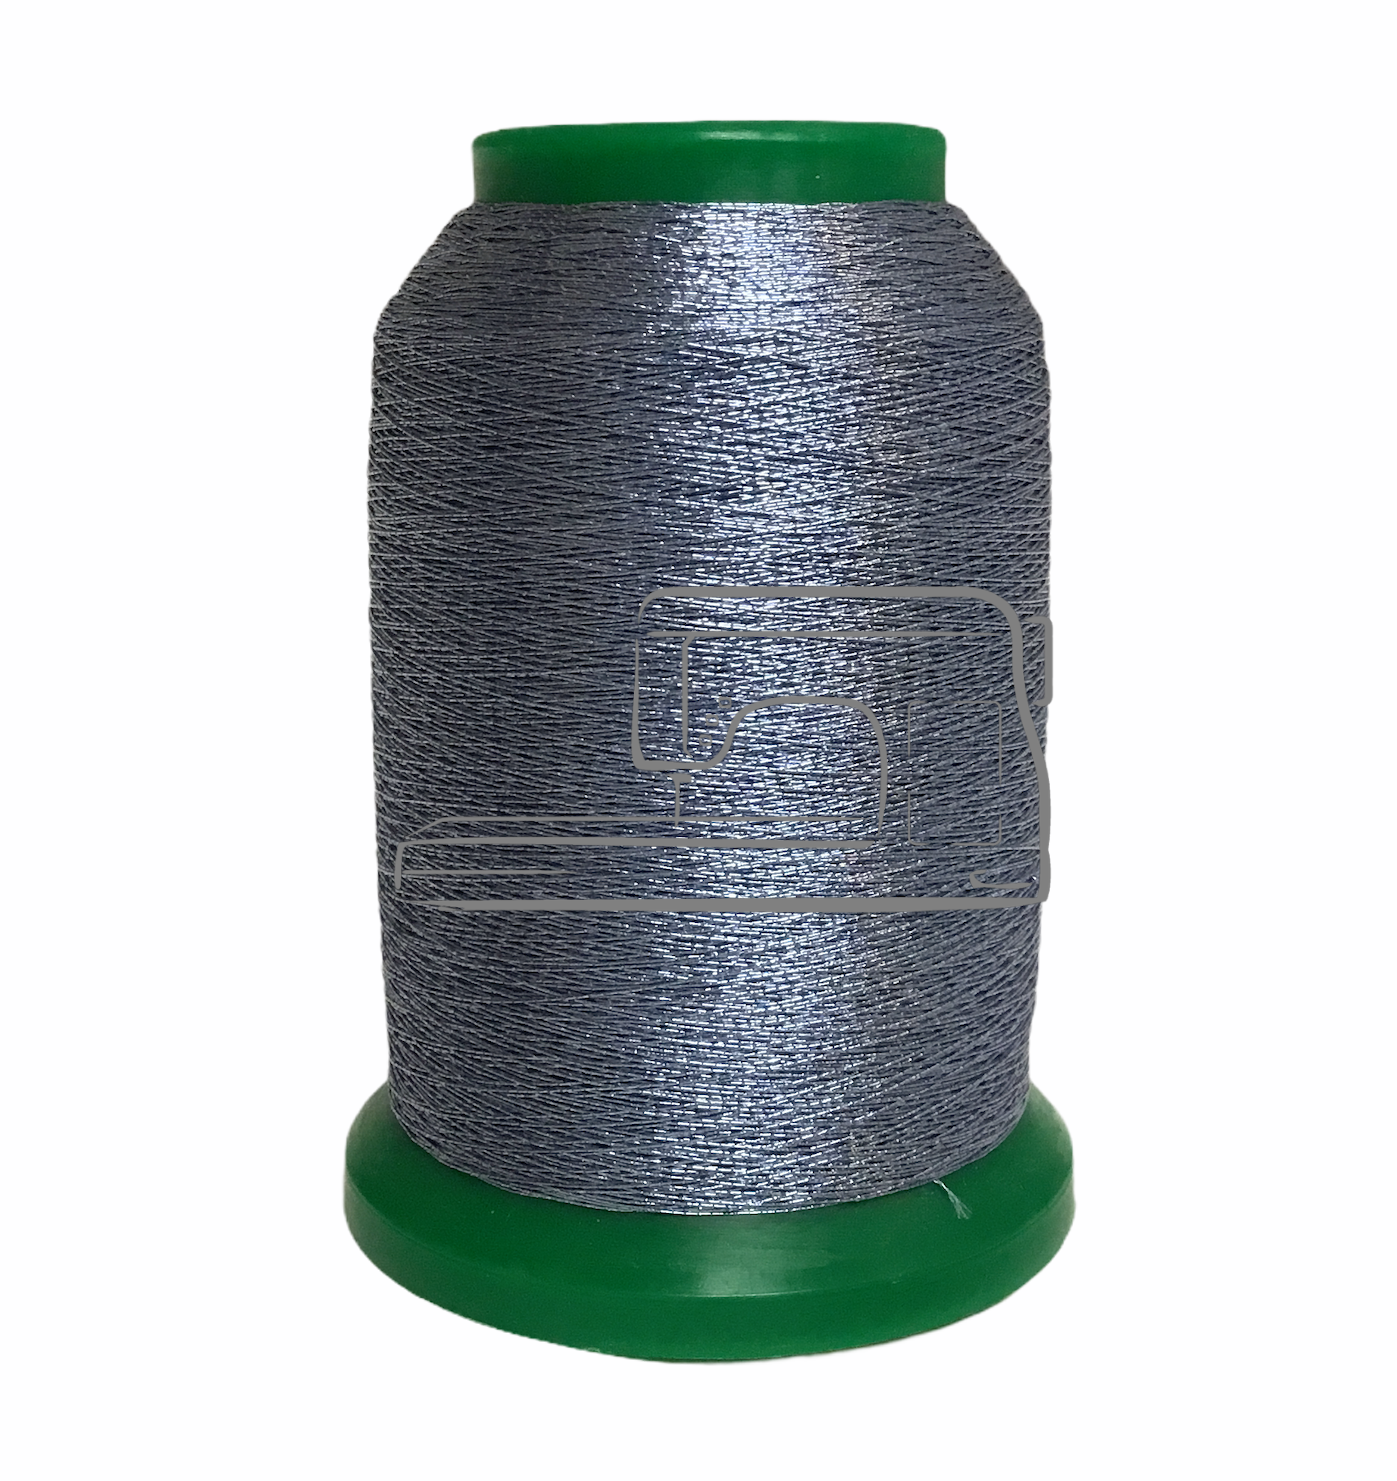 Isamet Isamet metallic sewing and embroidery thread SN16 1000m